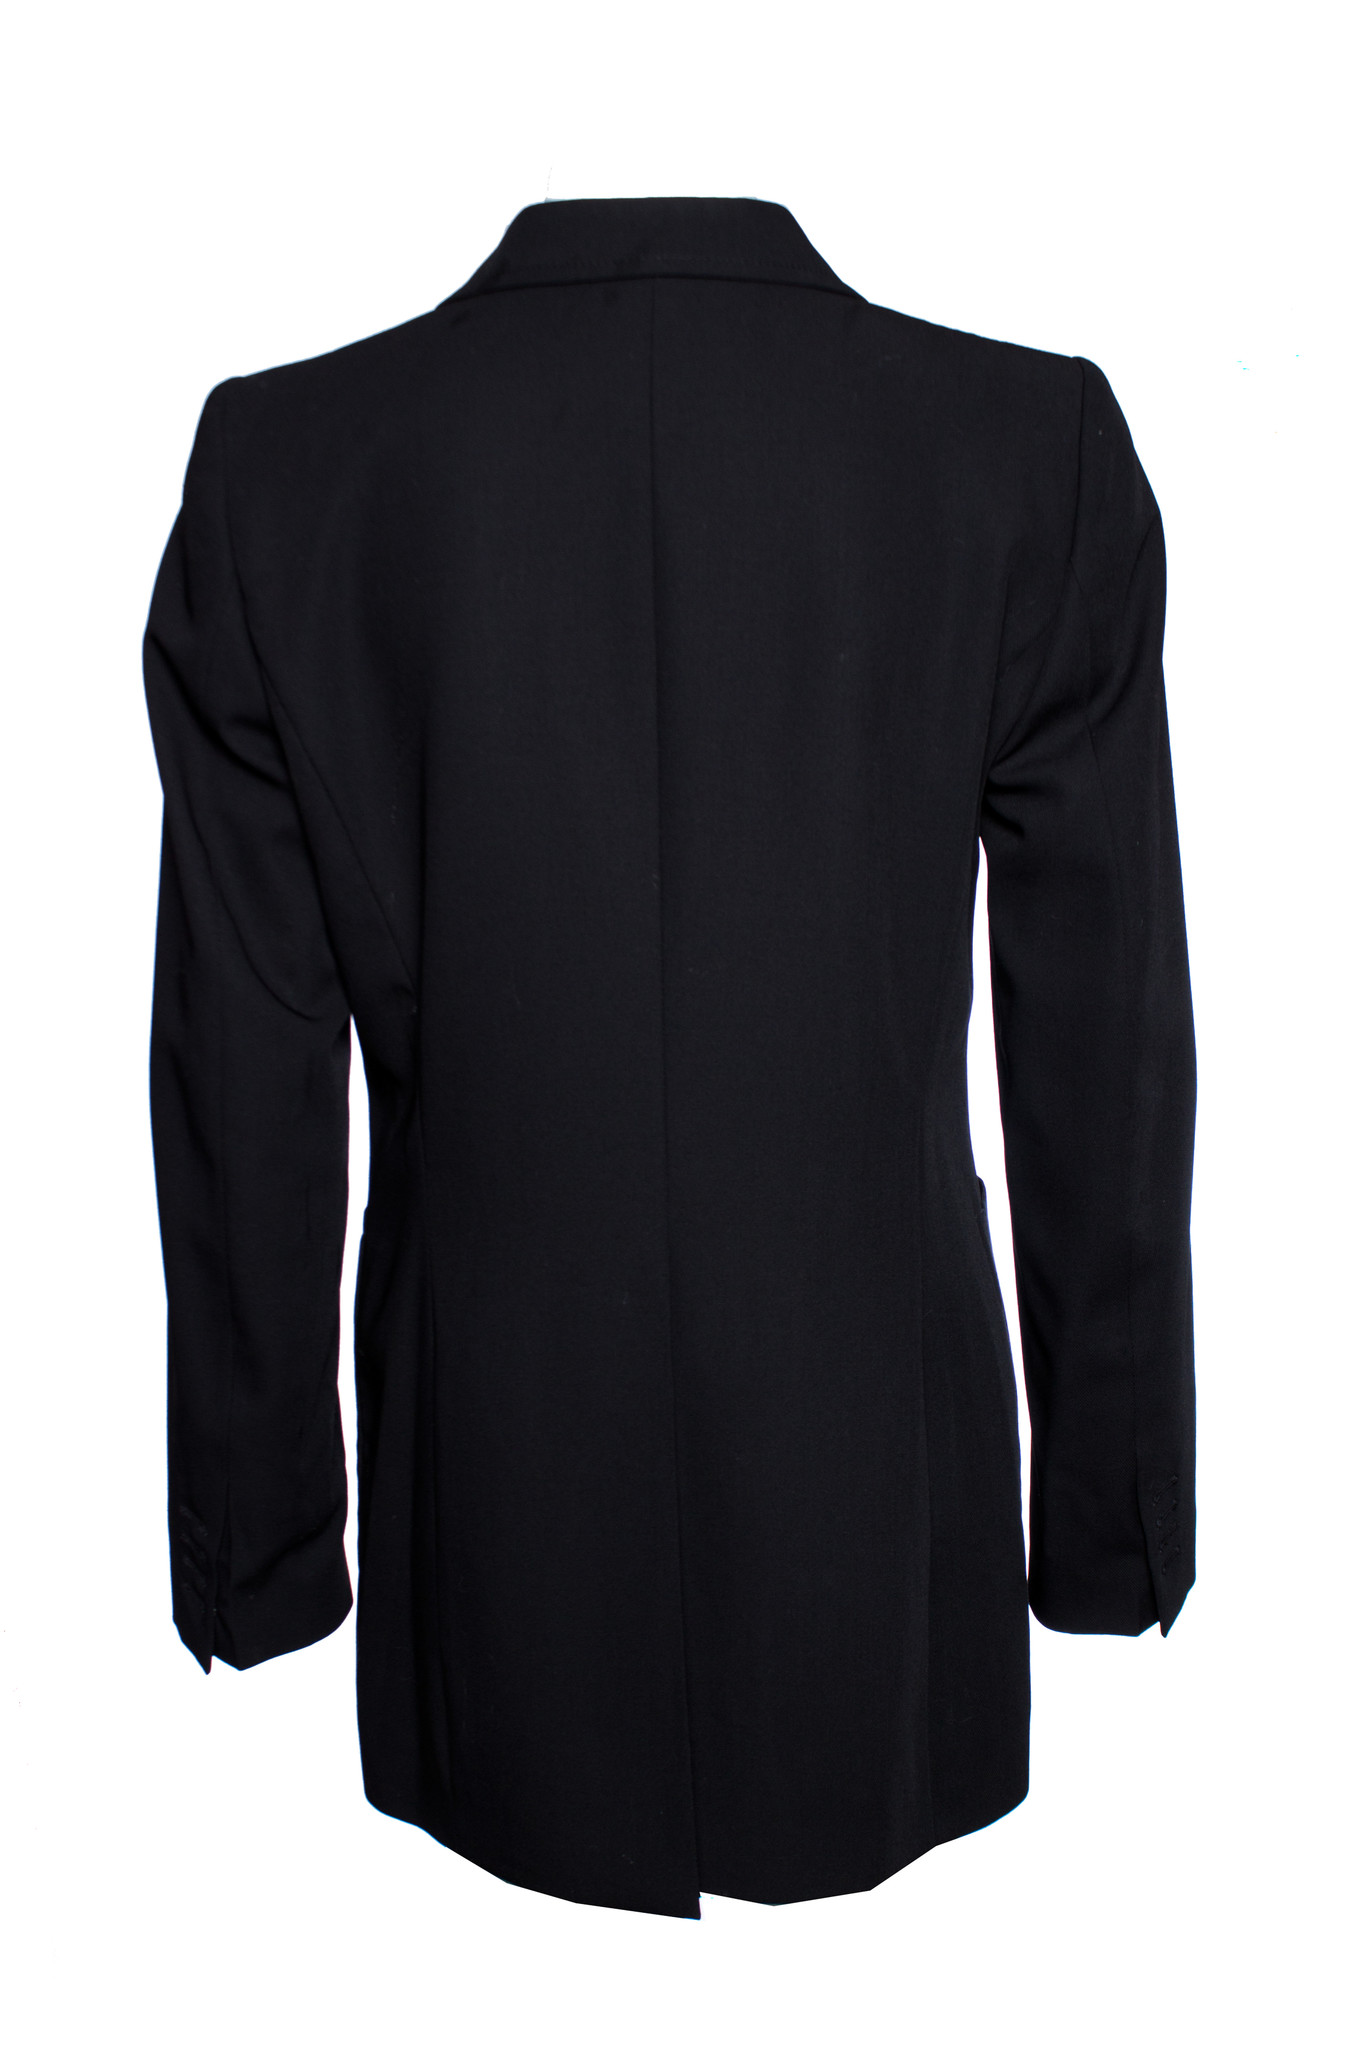 Dries van Noten, black wool blazer with shiny revert and press studs in ...